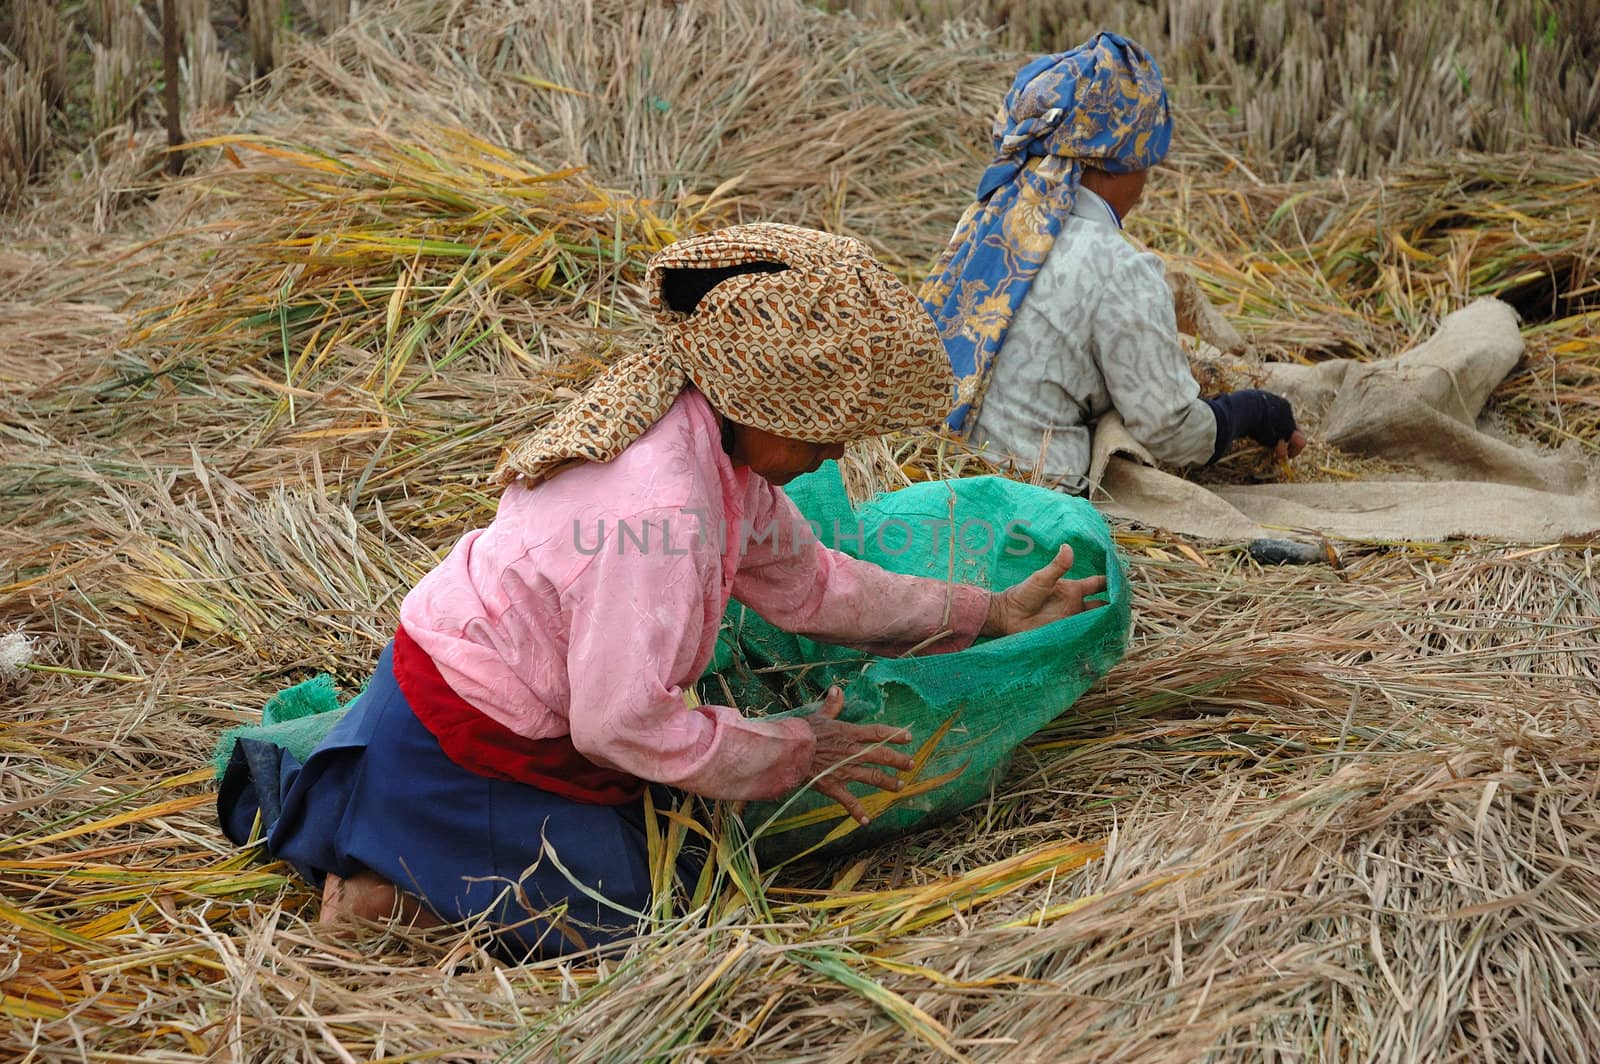 farmer harvesting paddies in their ricefield